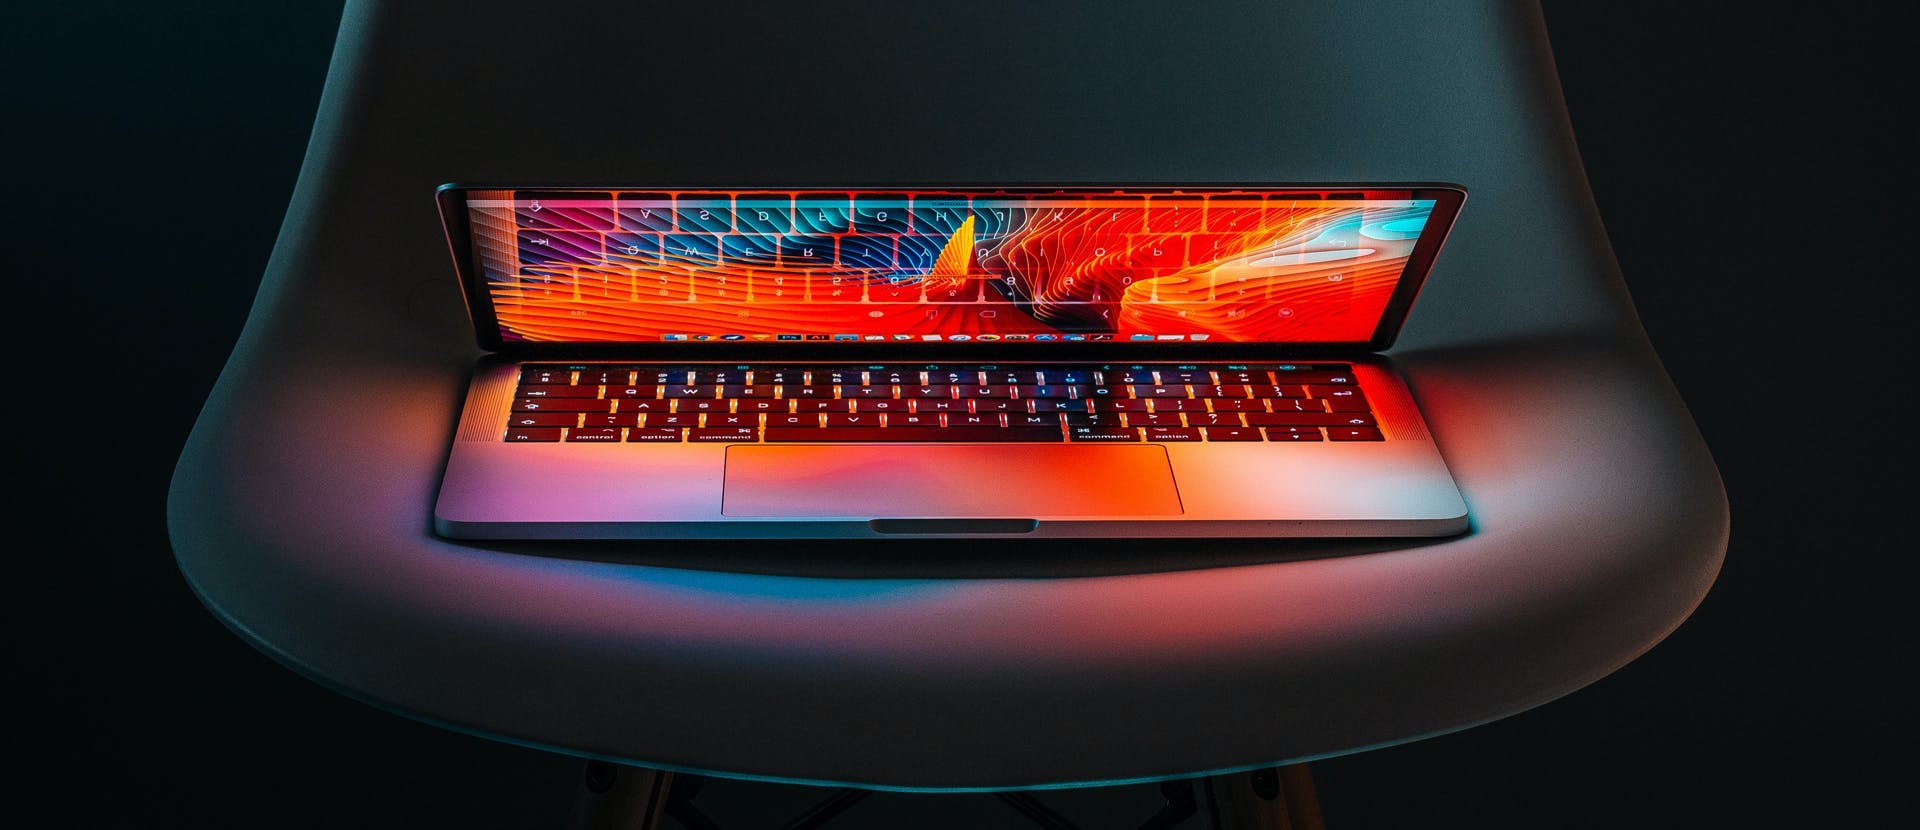 hardware computer keyboard electronics computer keyboard light lighting headlight pc laptop